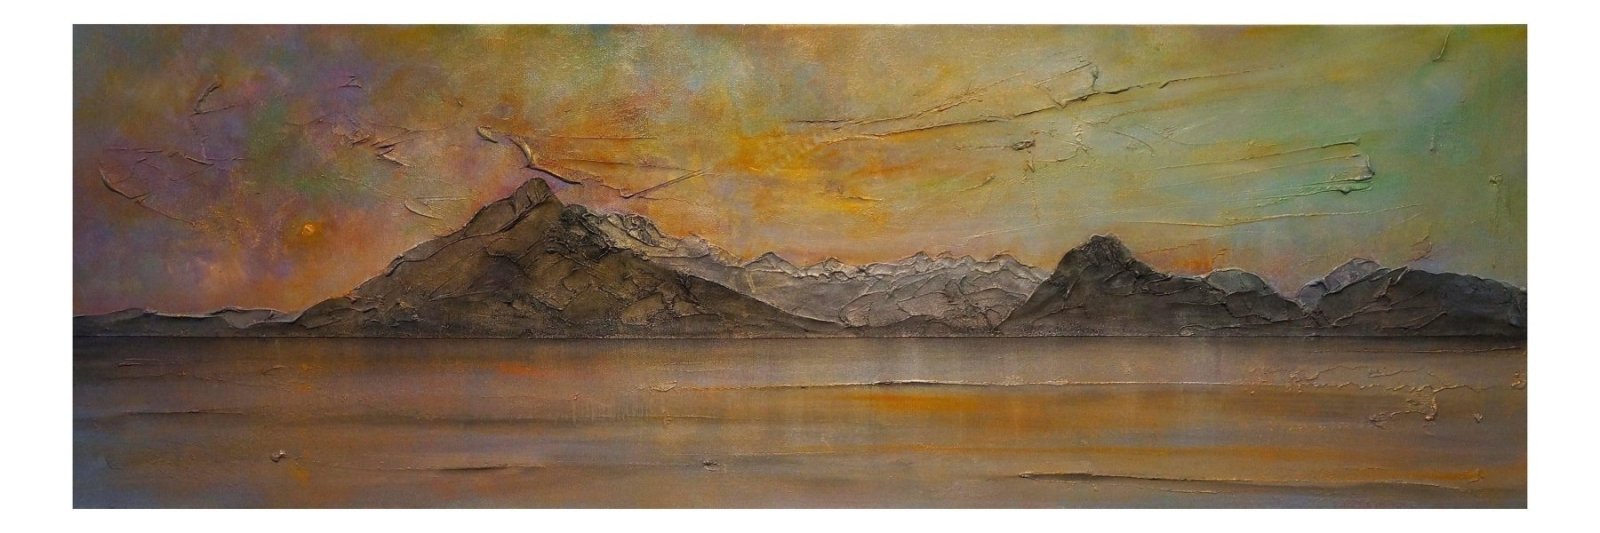 Cuillin Skye Dusk-Panoramic Prints-Skye Art Gallery-Paintings, Prints, Homeware, Art Gifts From Scotland By Scottish Artist Kevin Hunter